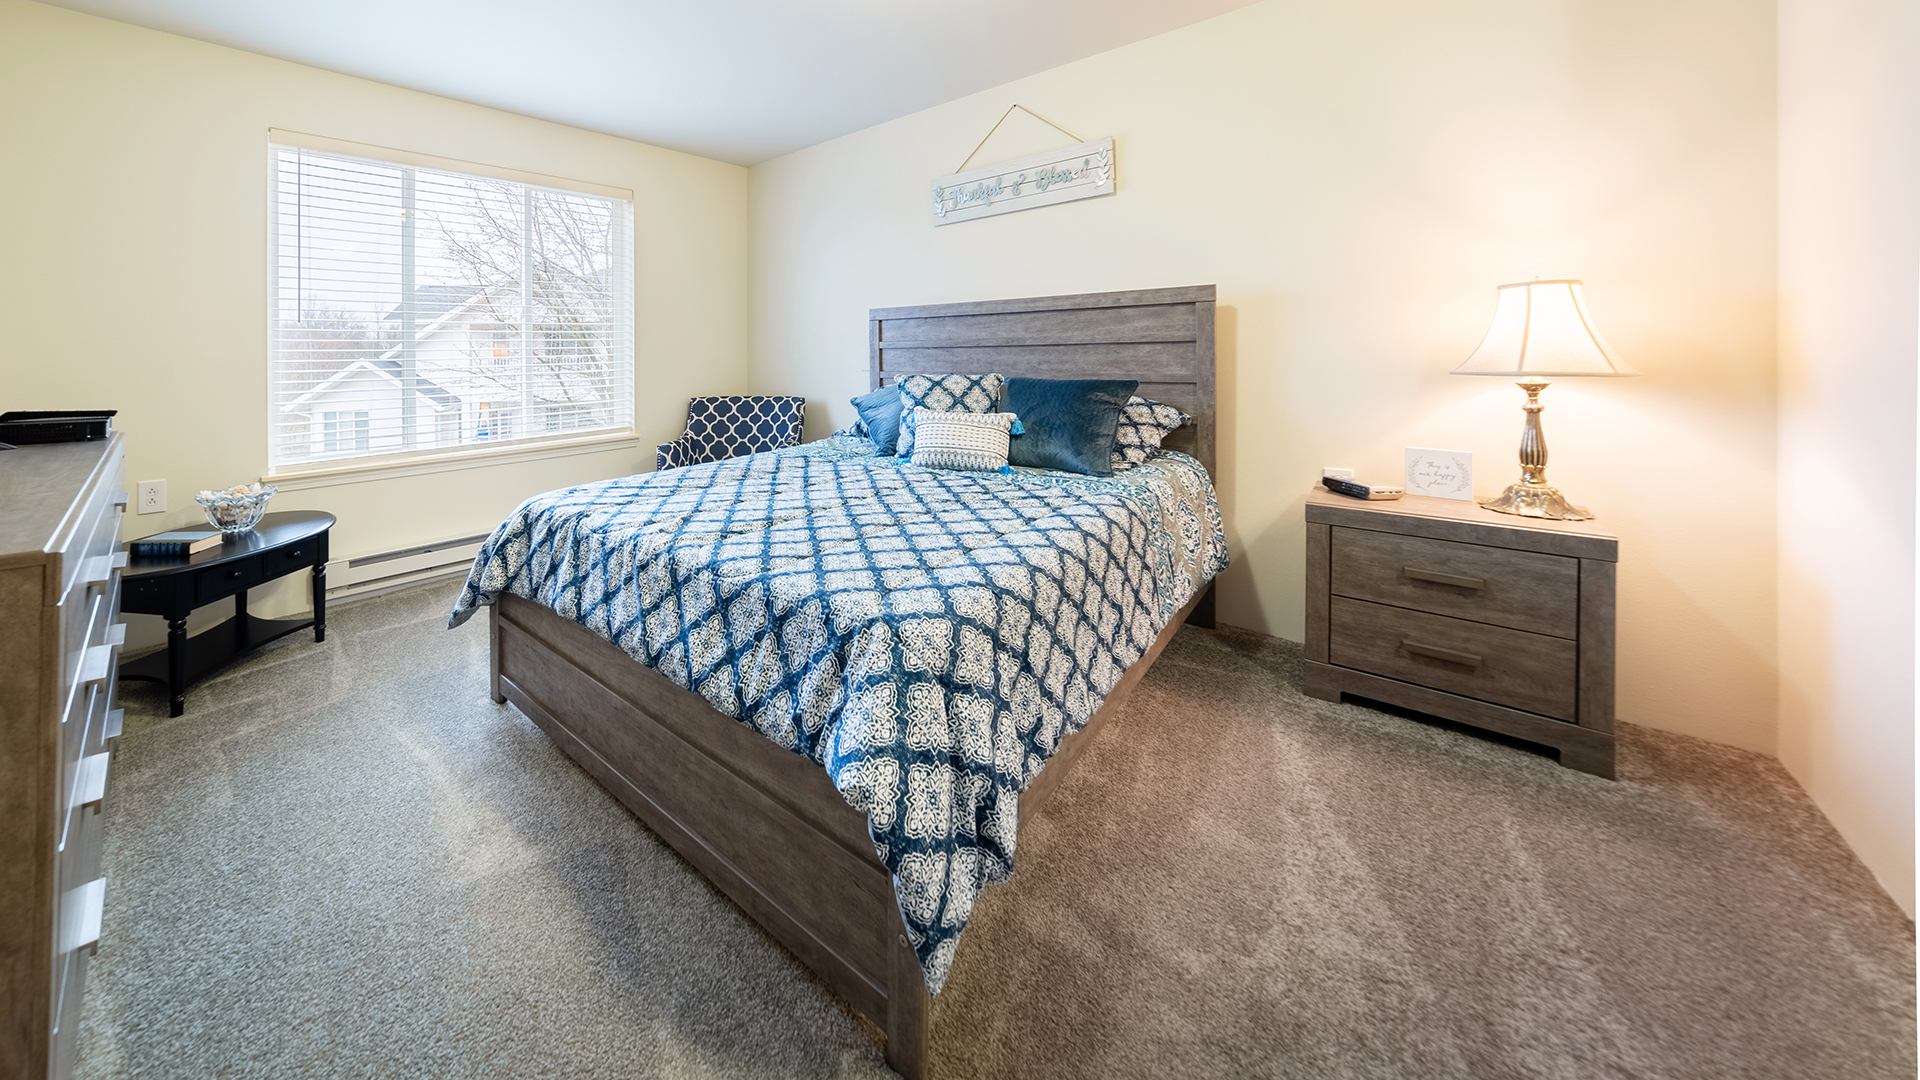 Bedroom with blue patterned bedspread